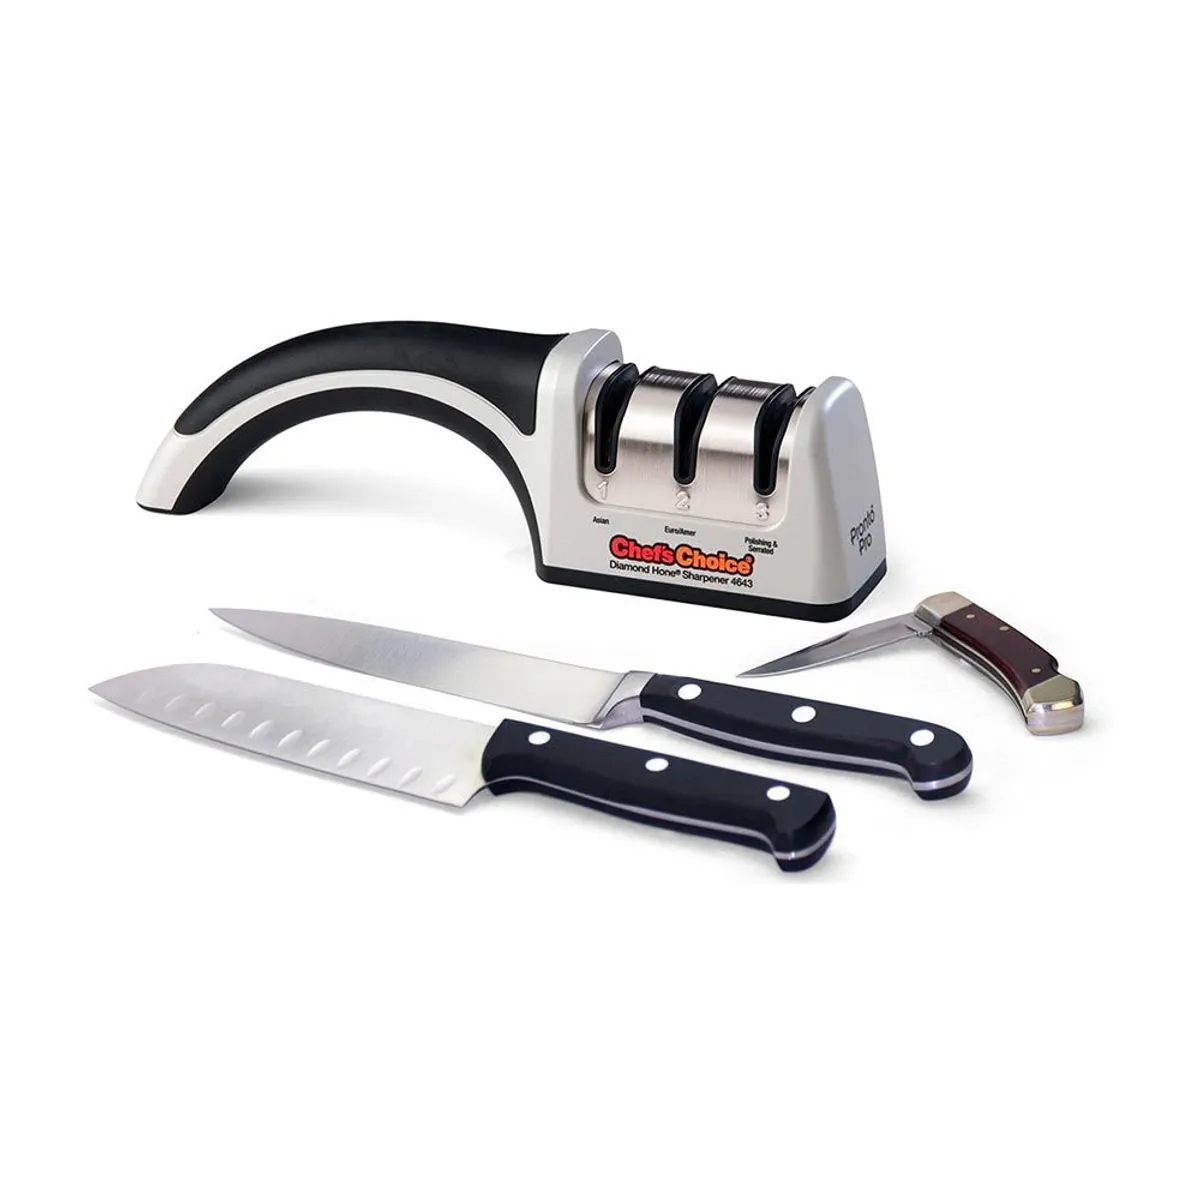 Chef’sChoice 4643 ProntoPro Diamond Hone Manual Knife Sharpener